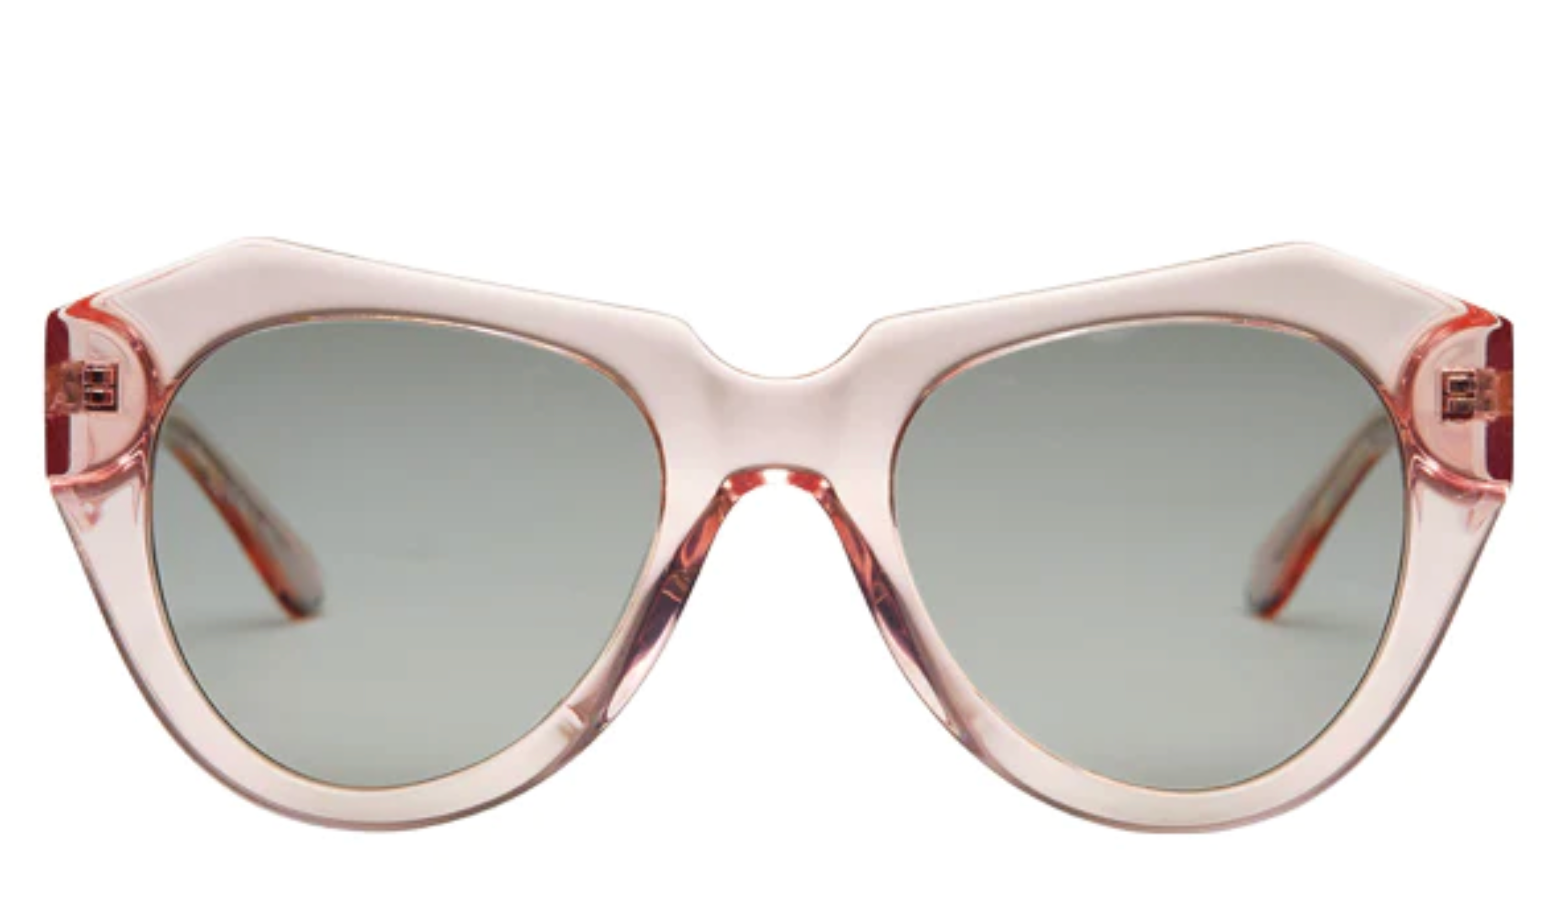 Magenta Blush Sunglasses